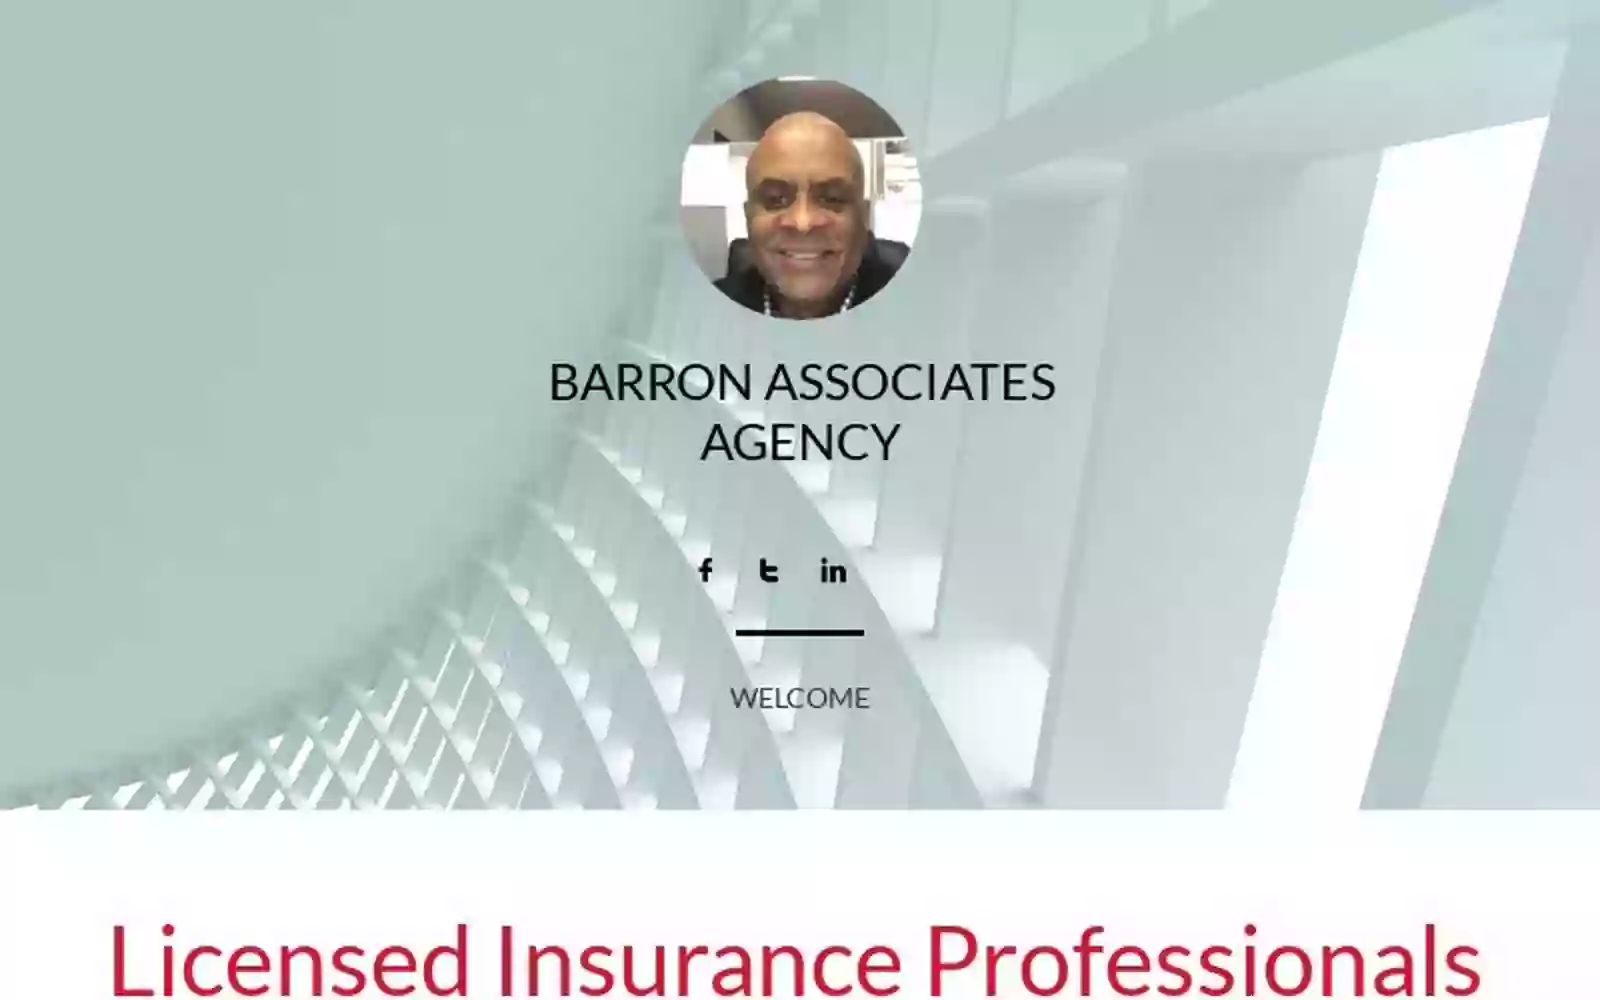 Barron Associates Agency